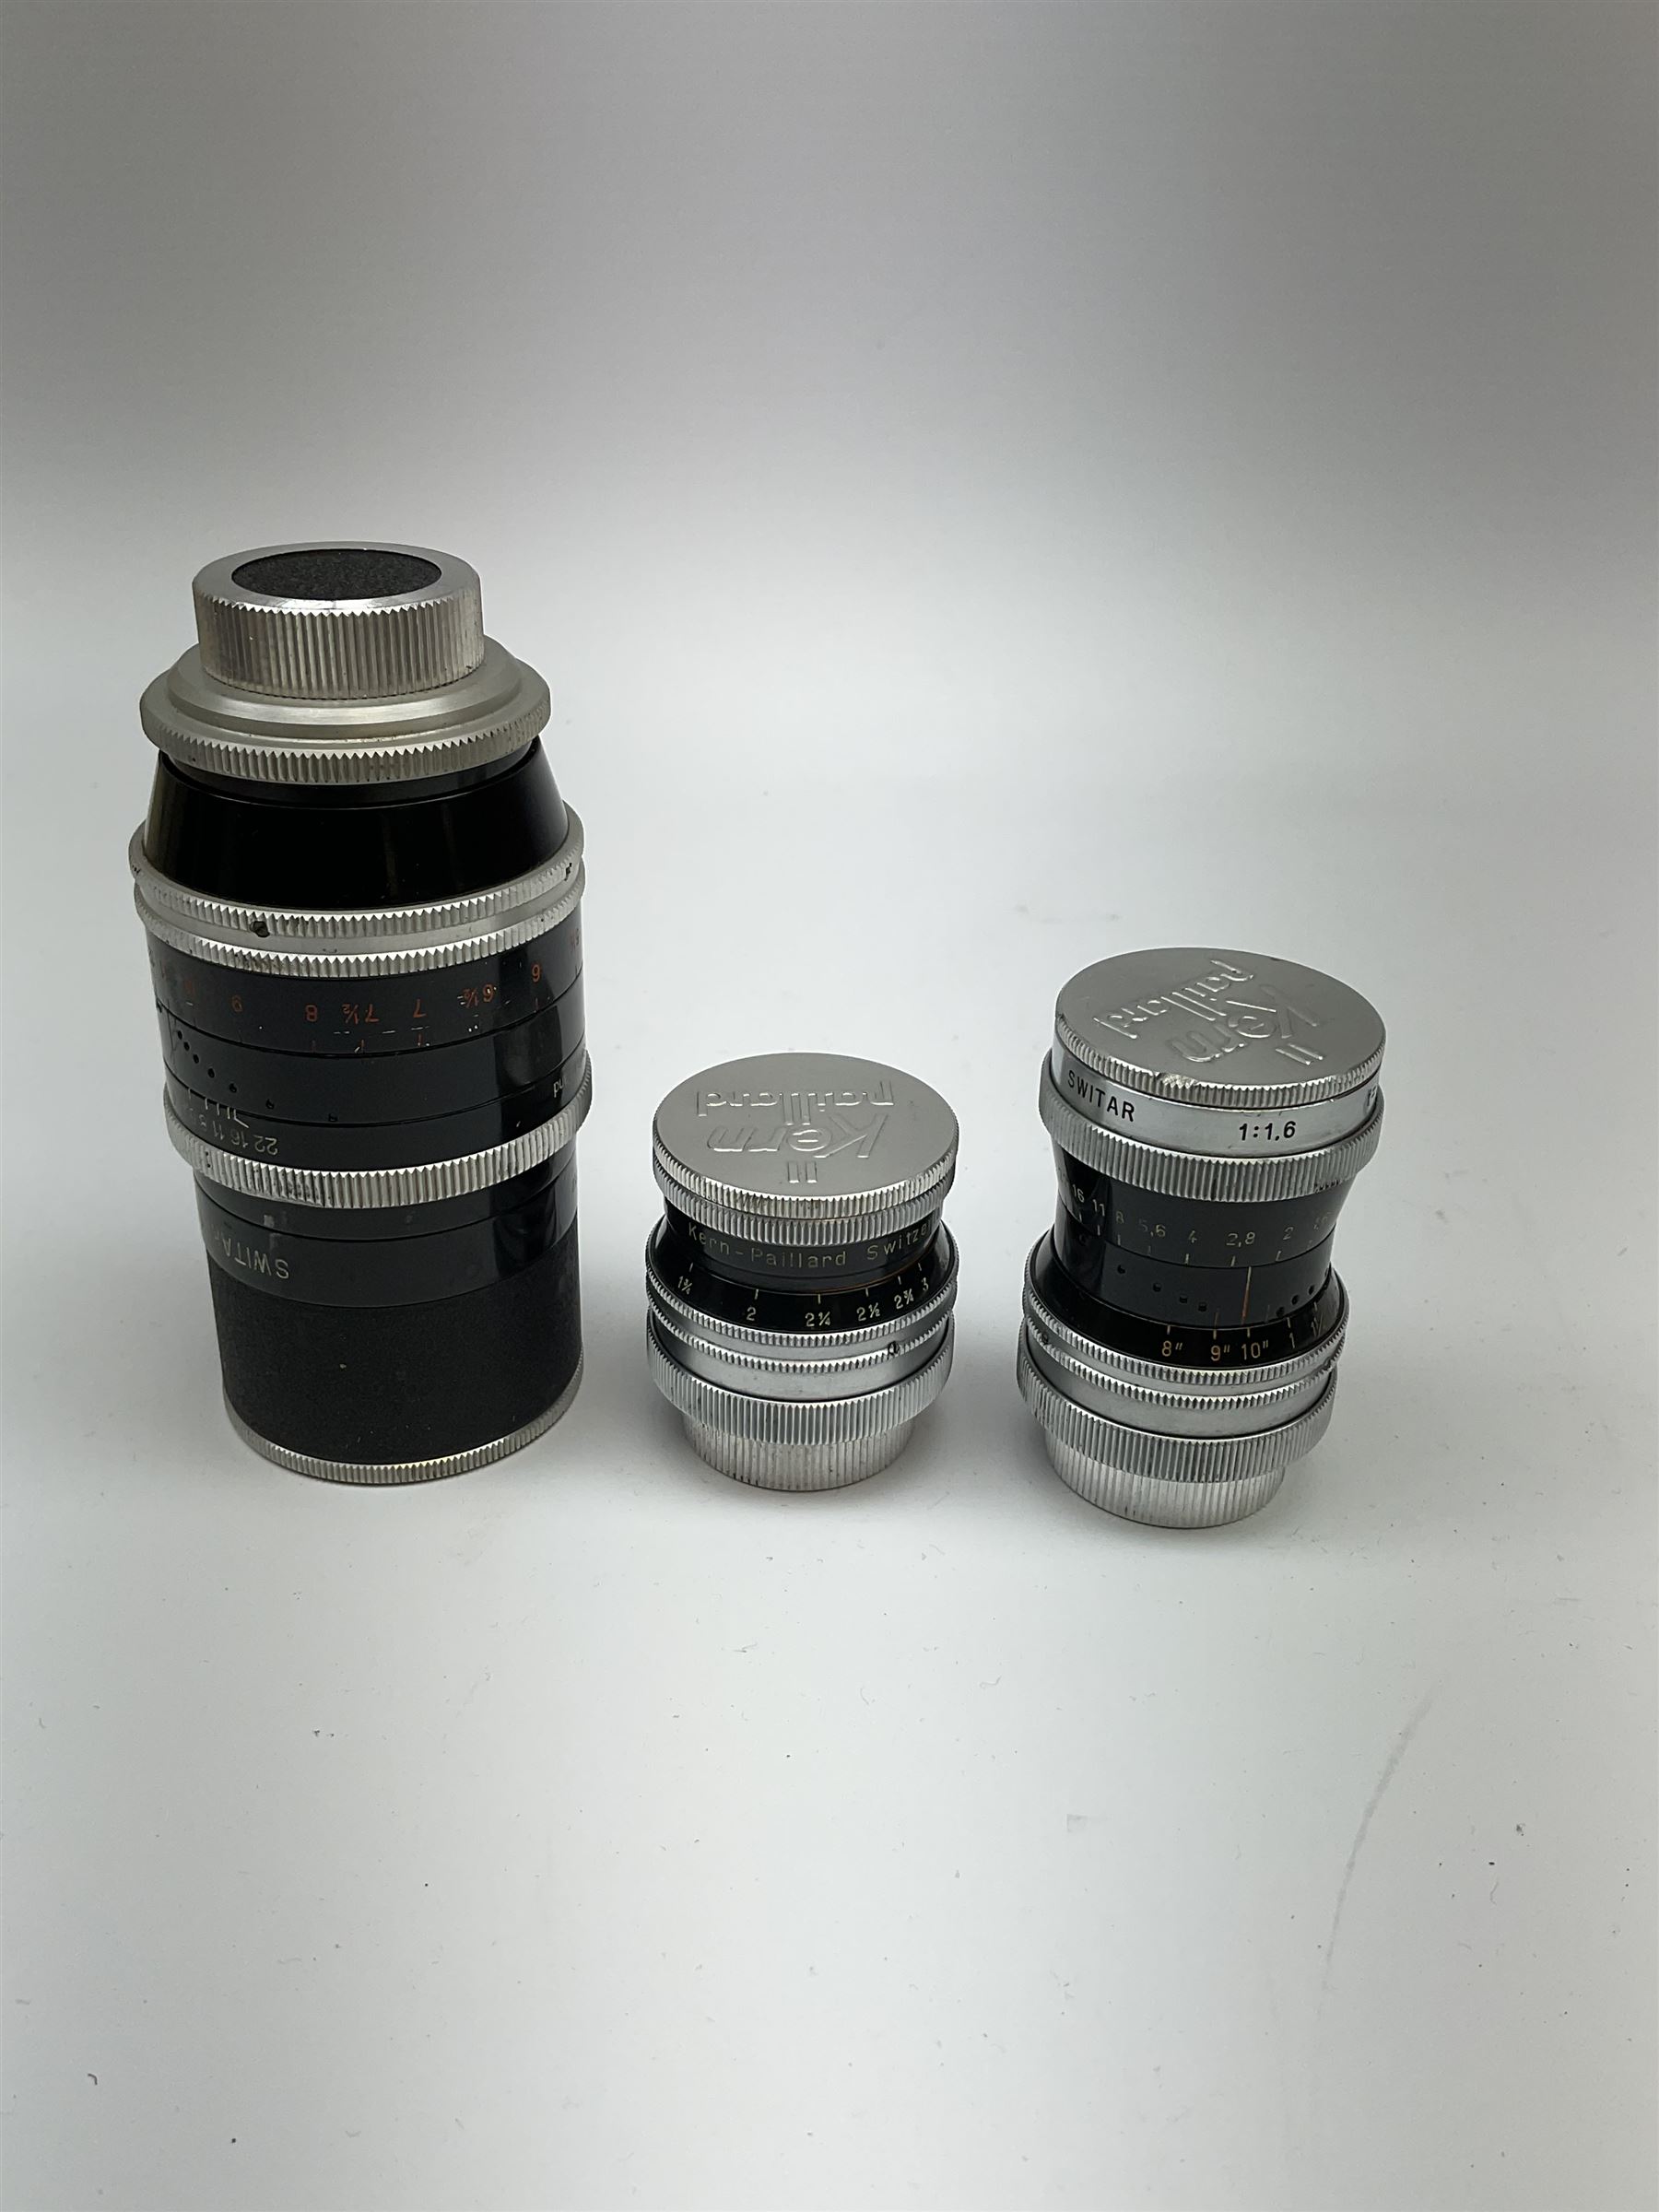 Paillard Bolex H16 Reflex 16mm cine camera with handgrip and turret for interchangeable lenses - Image 4 of 15